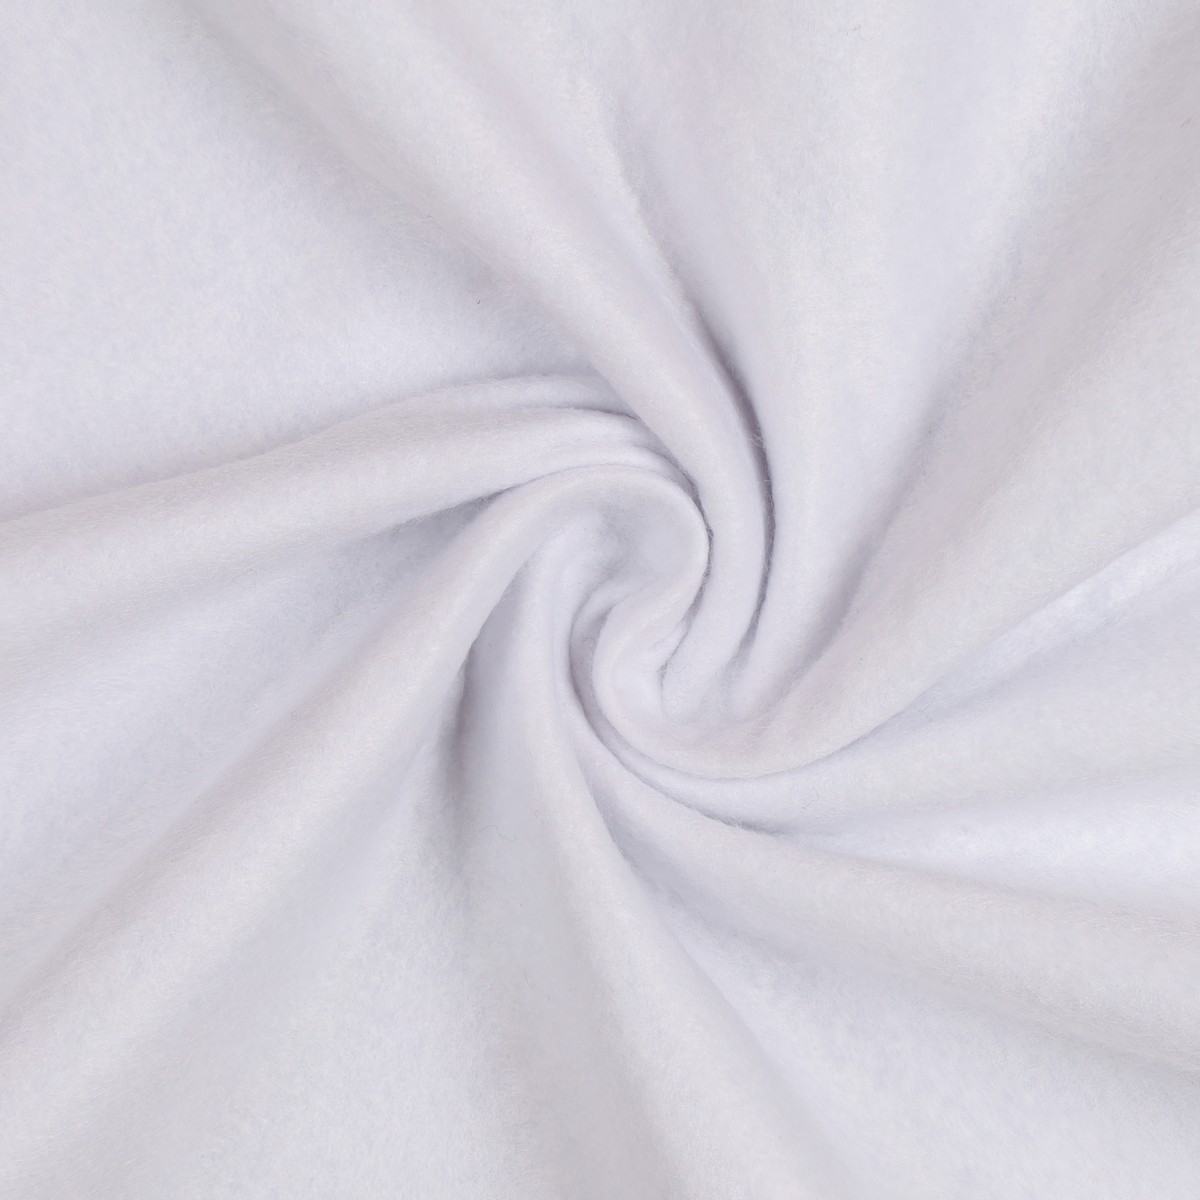 Pannelli Pannolenci - Colore Bianco - Misura 50x70cm 